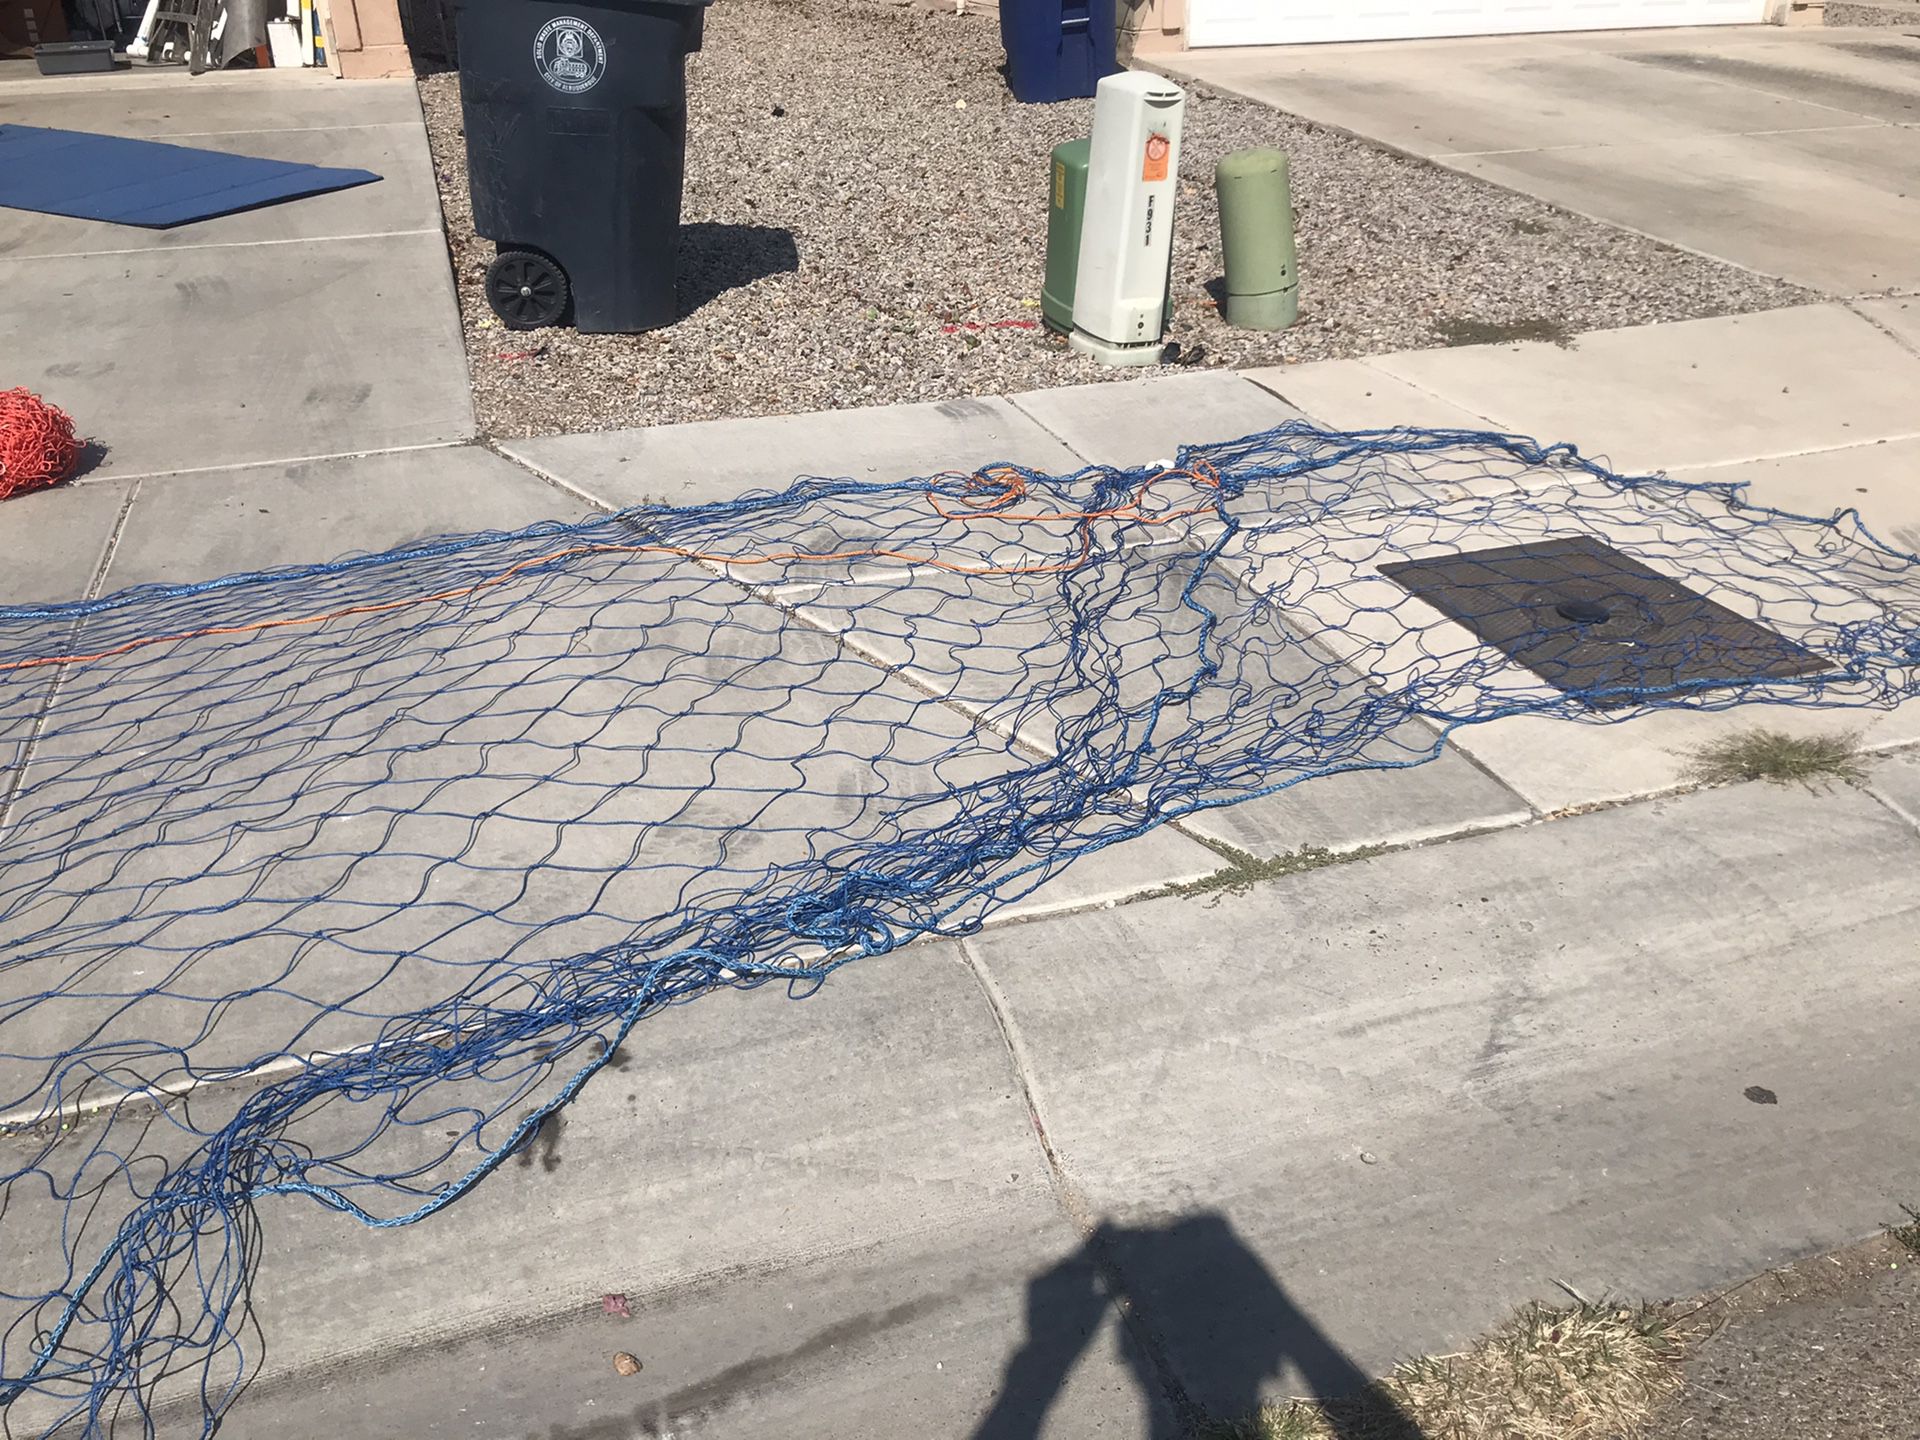 Two fishing nets